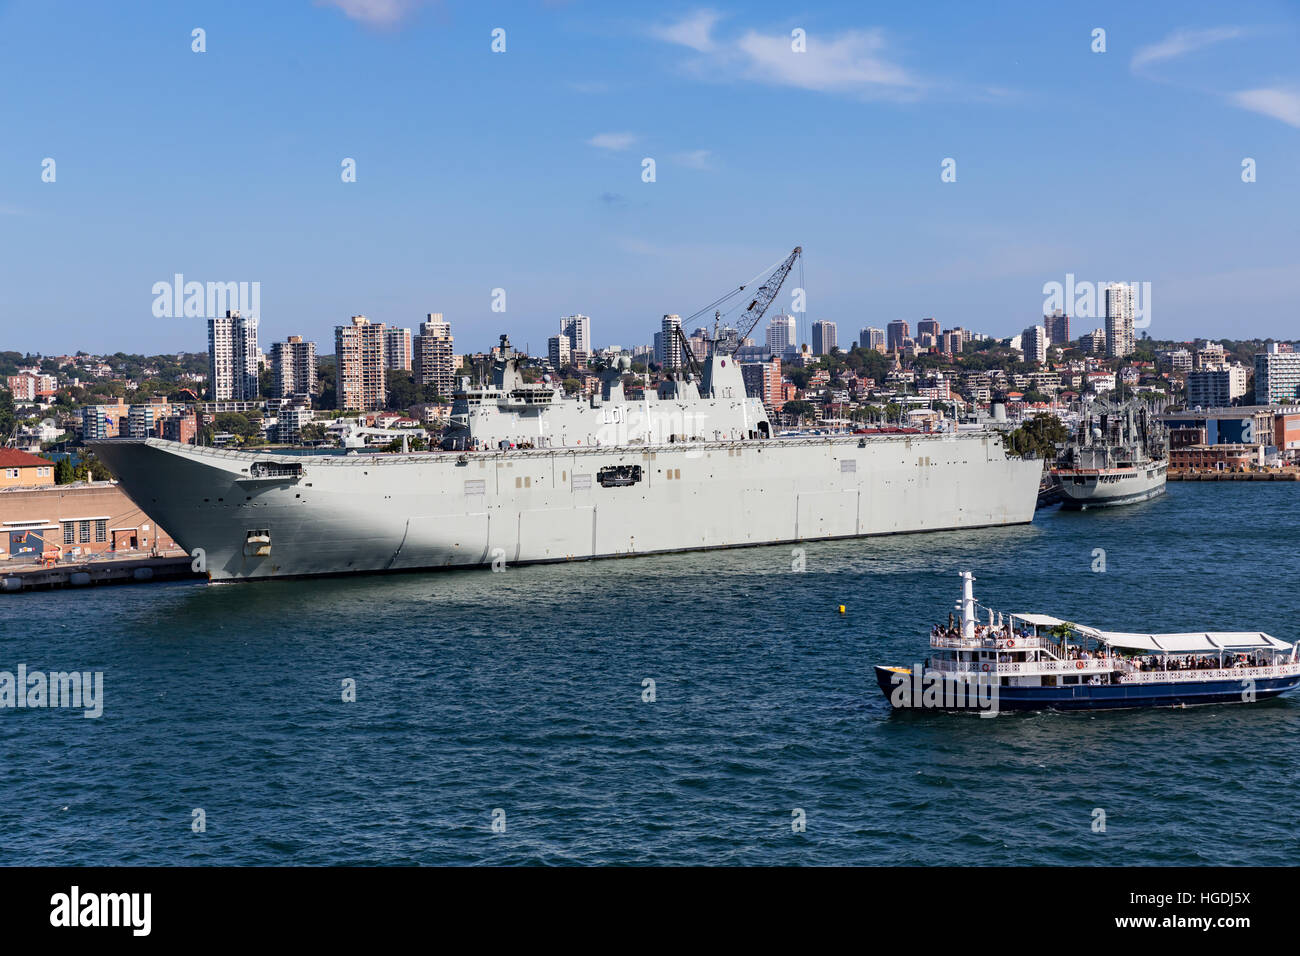 HMAS Adelaide (L01) all'Isola Giardino Naval Dockyard nel porto di Sydney Foto Stock